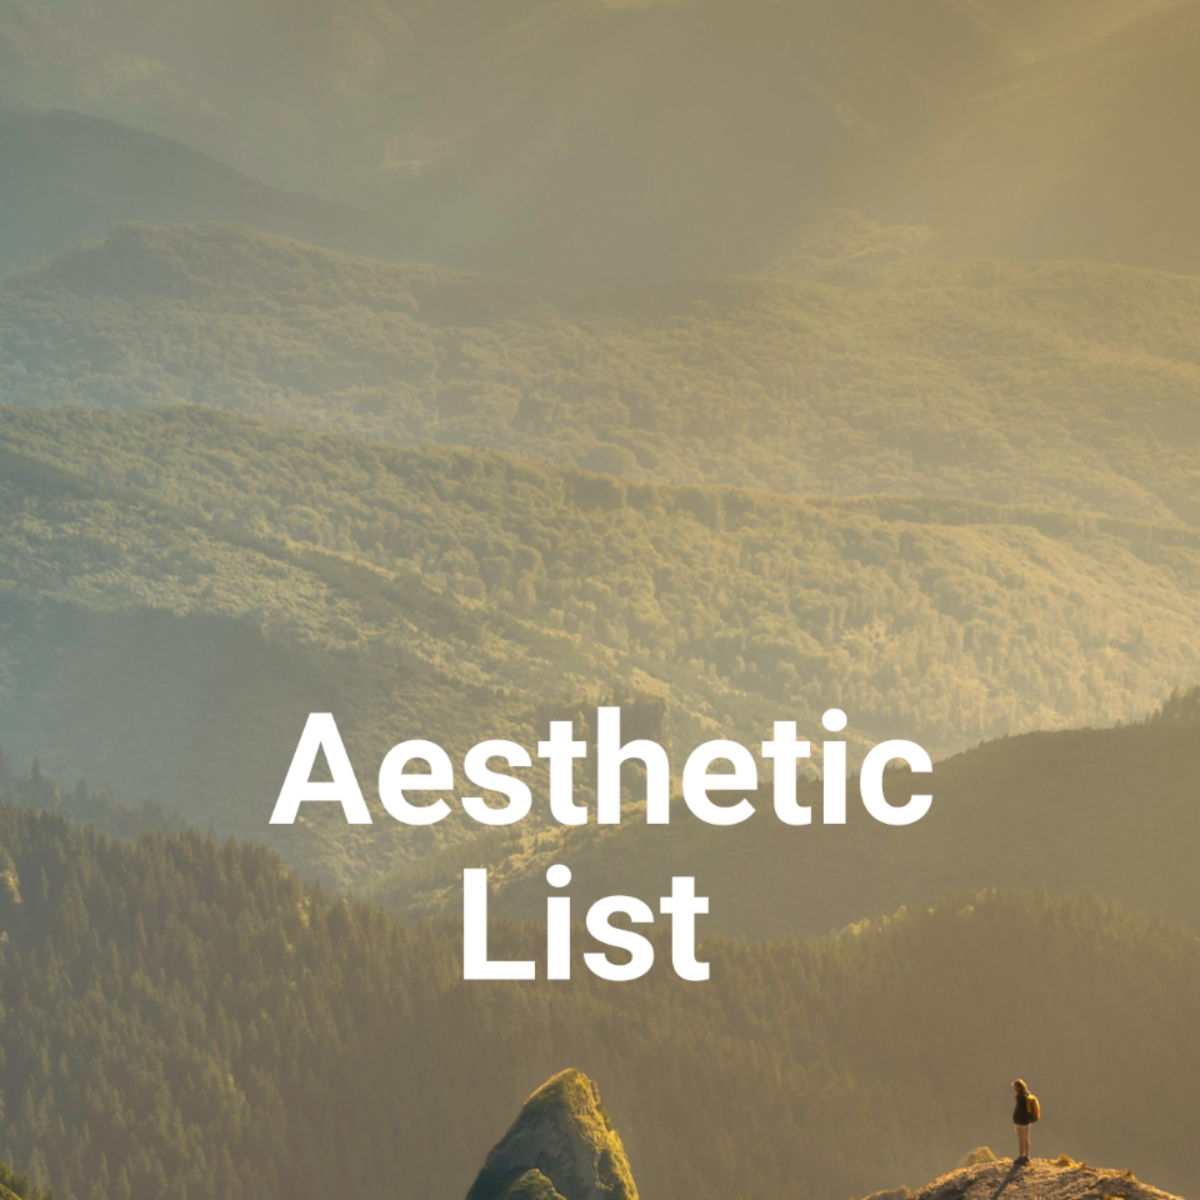 Aesthetic List Template